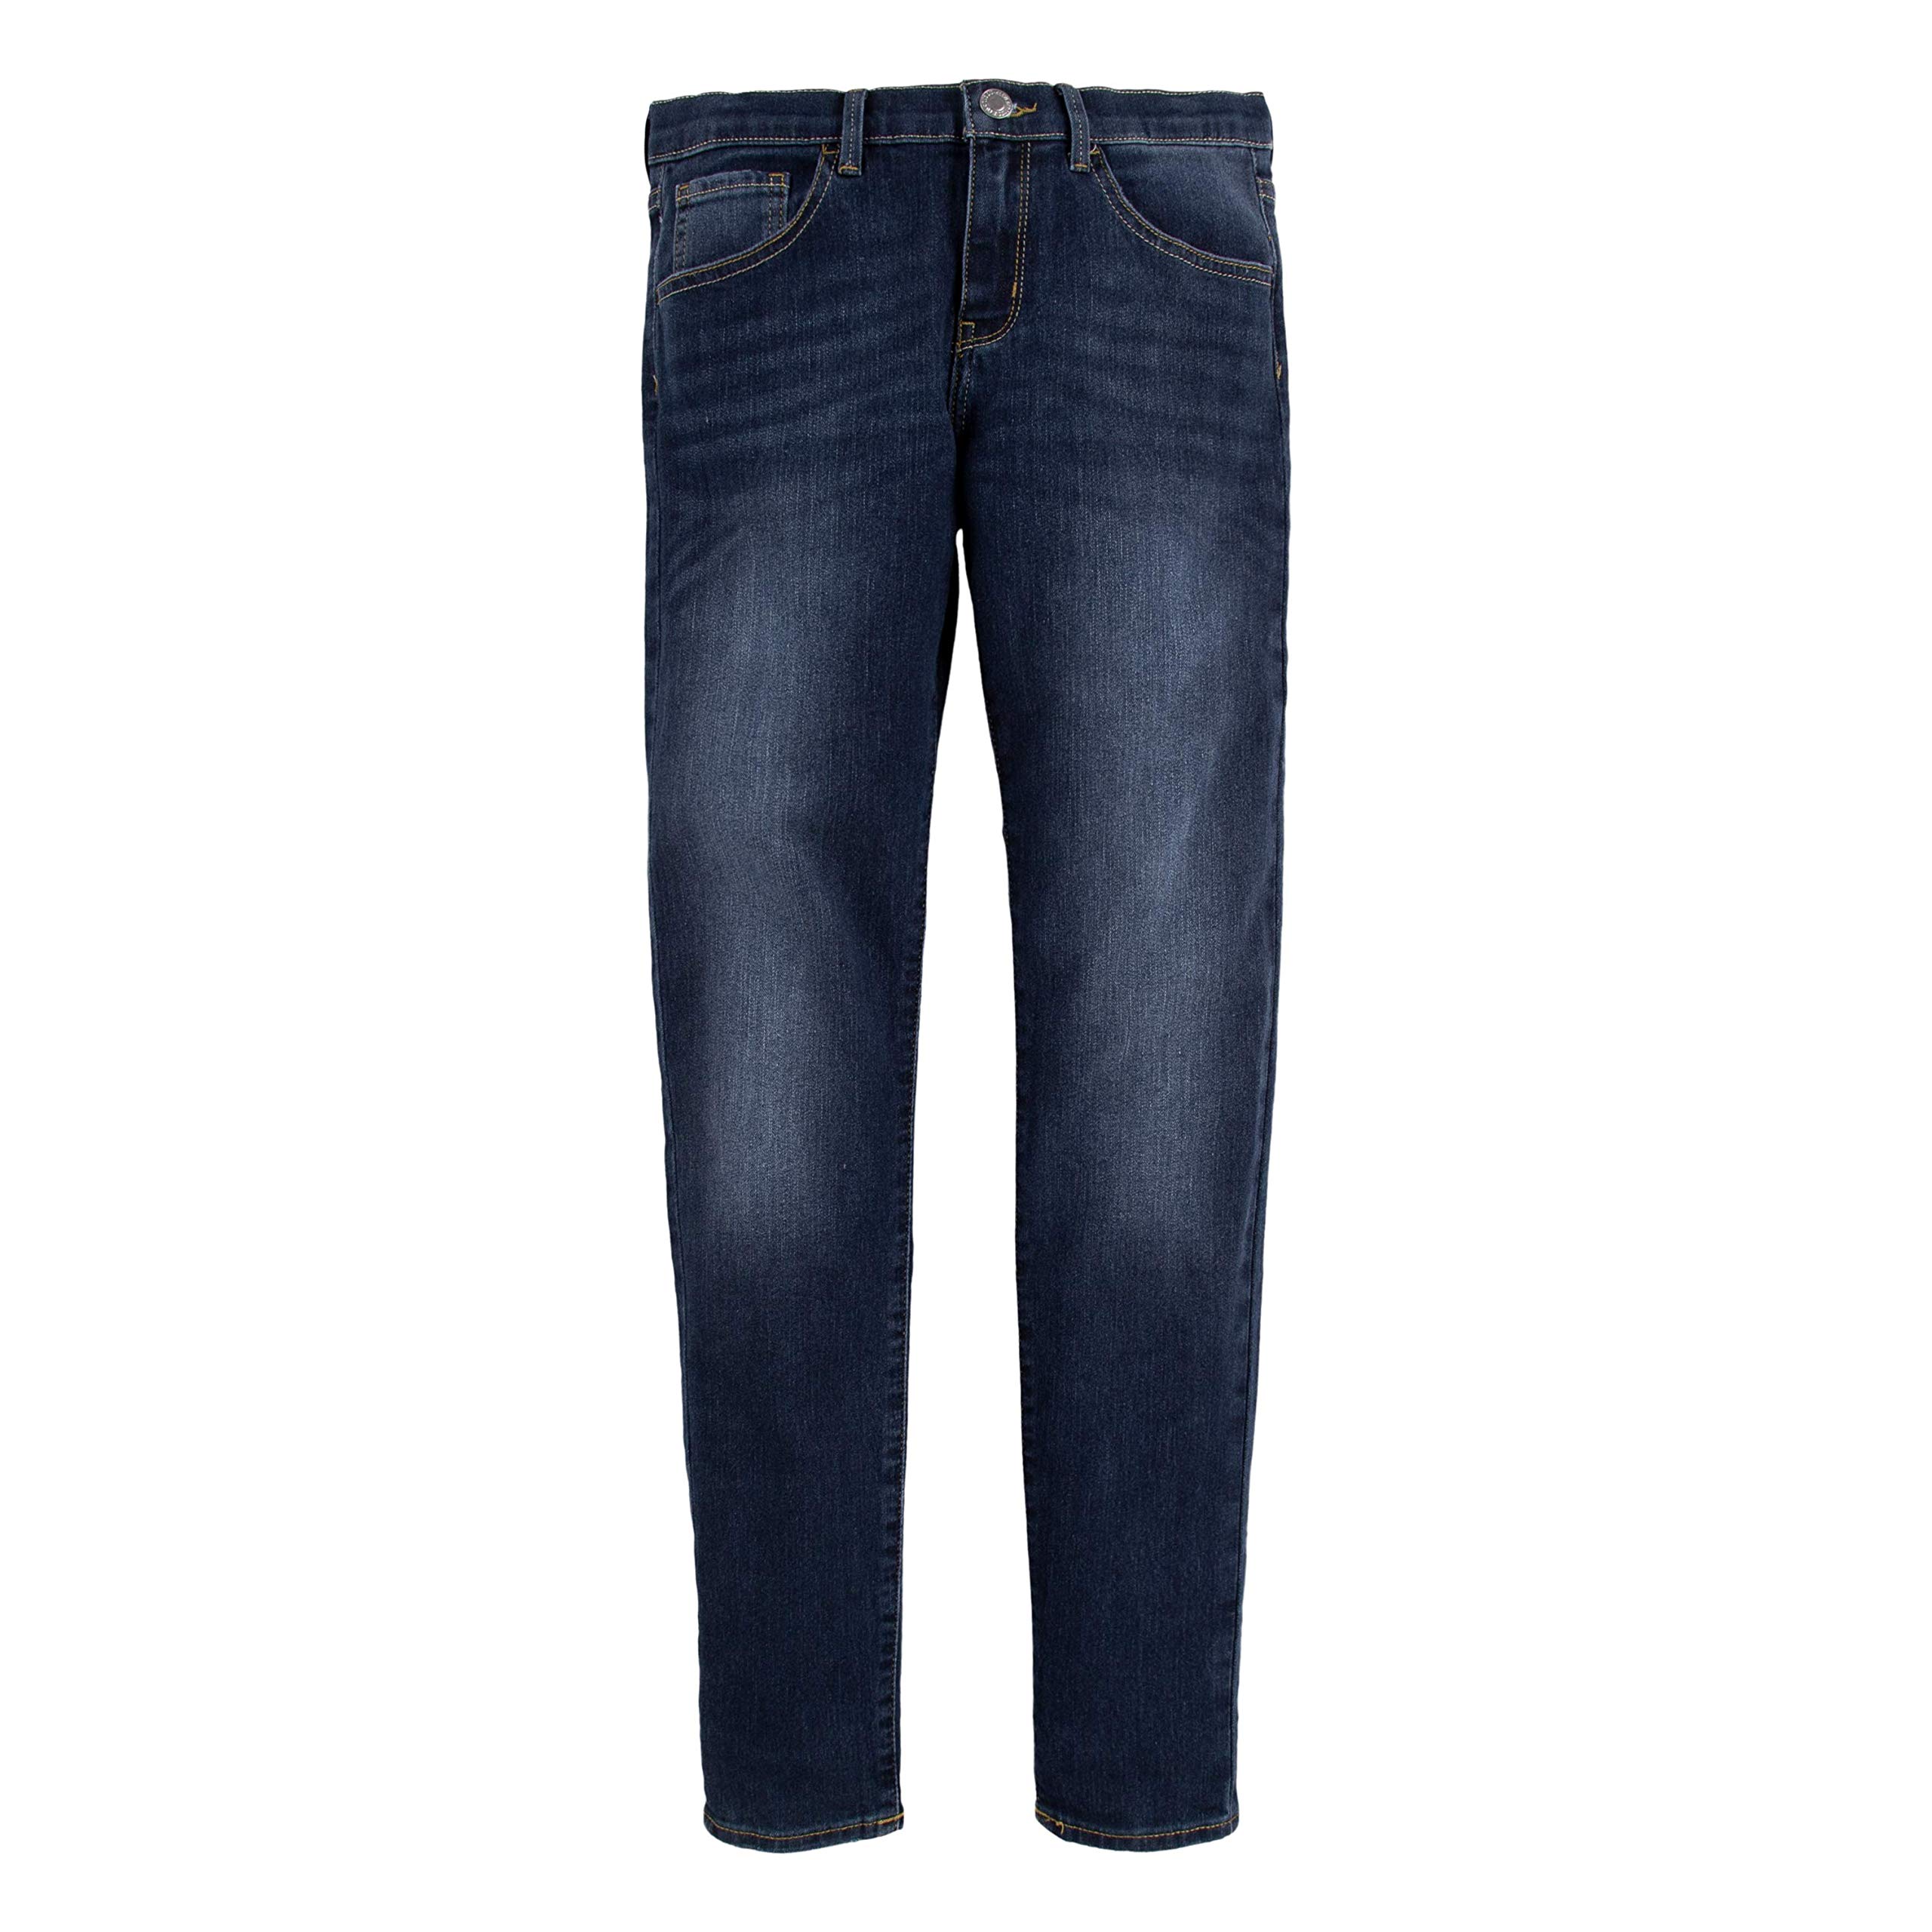 Levi's Big Girls' 710 Super Skinny Fit Classic Jeans, Blue Asphalt, 8 - $12 $12.1